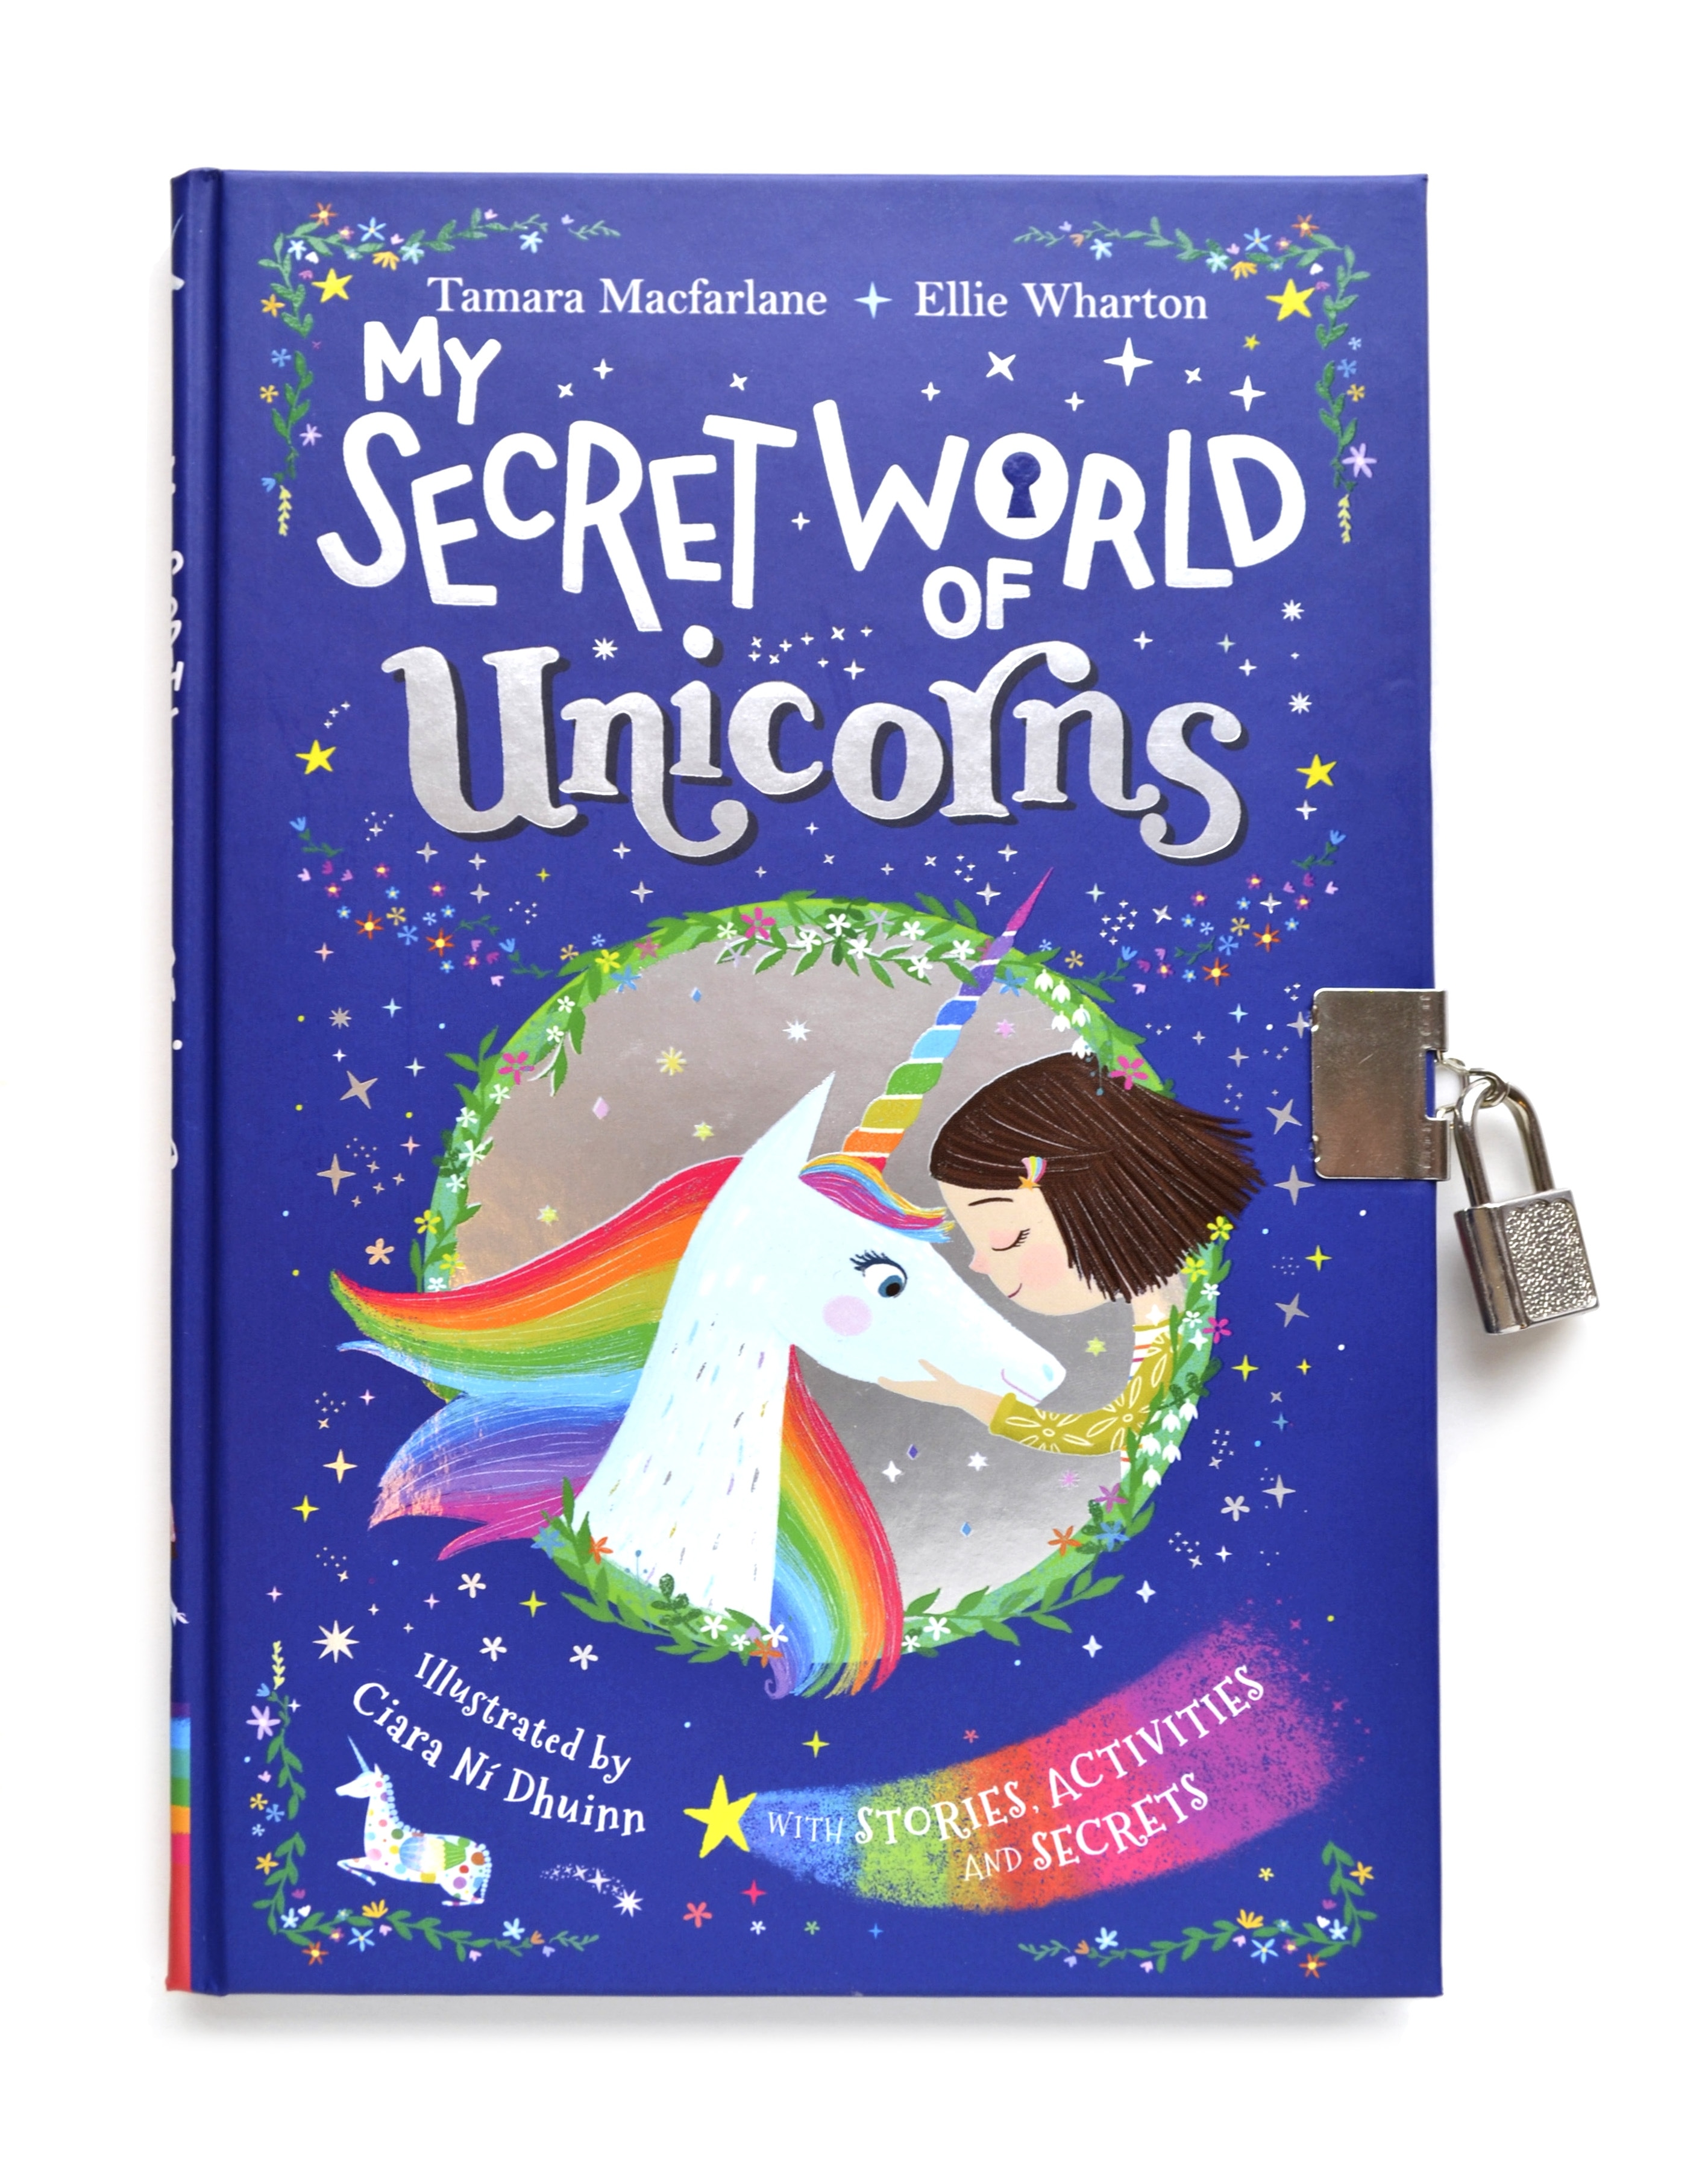 Book “My Secret World of Unicorns” by Ellie Wharton, Tamara Macfarlane — August 8, 2019